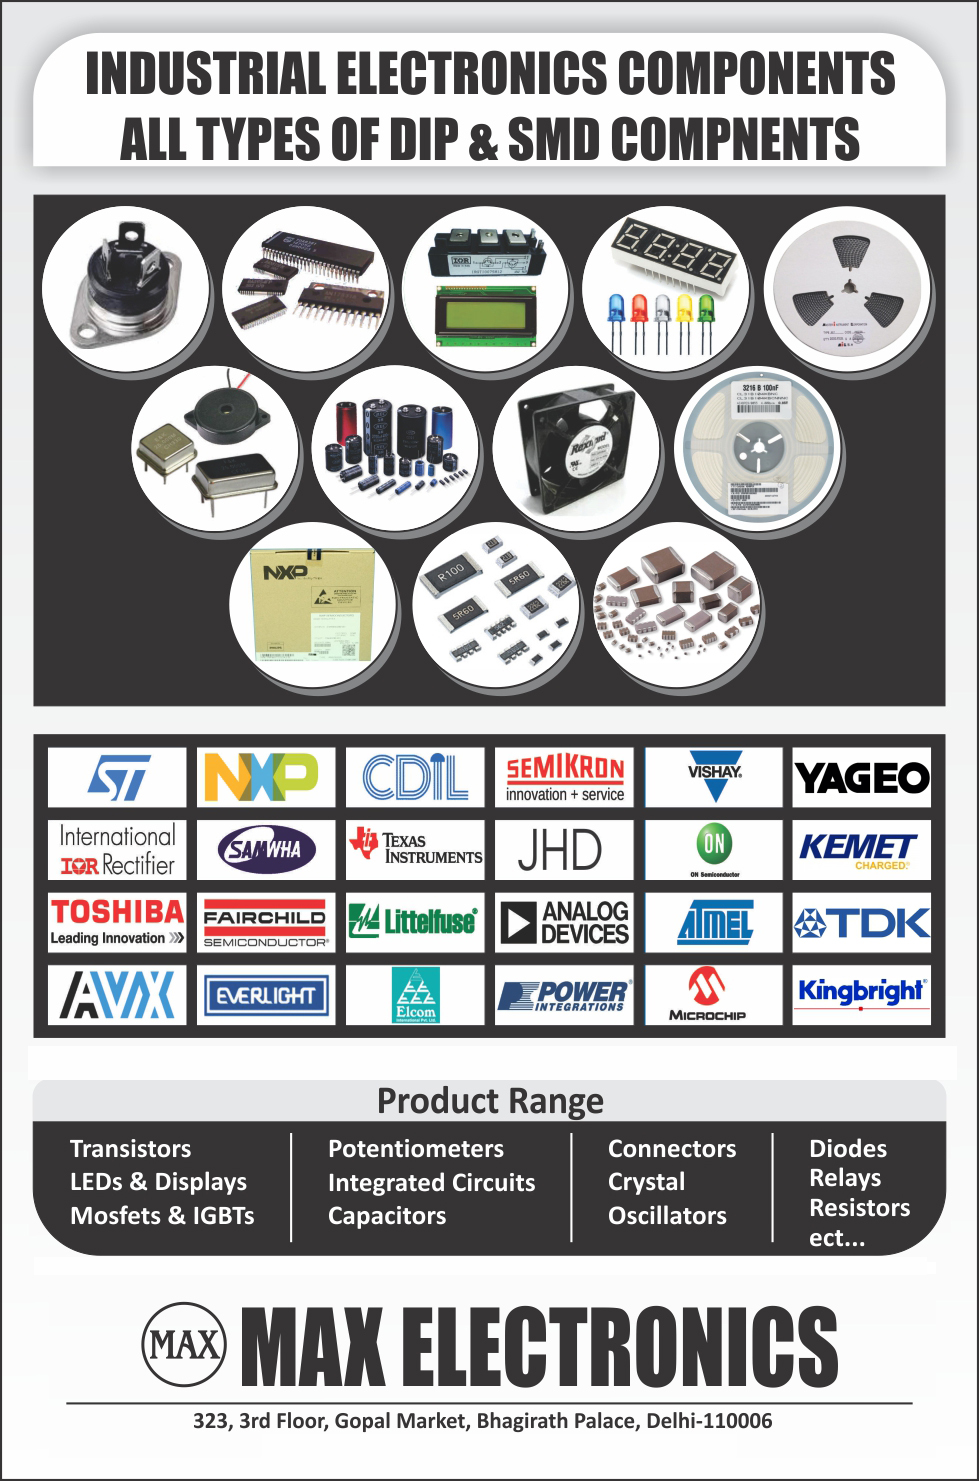 Industrial Electronics Components, DIP Components, SMD Components, Semiconductors, Power Modules, Power Semiconductor, Led Displays, Relays, Electrolytic Capacitors, Resistors, Ceramic Capacitors, Diodes